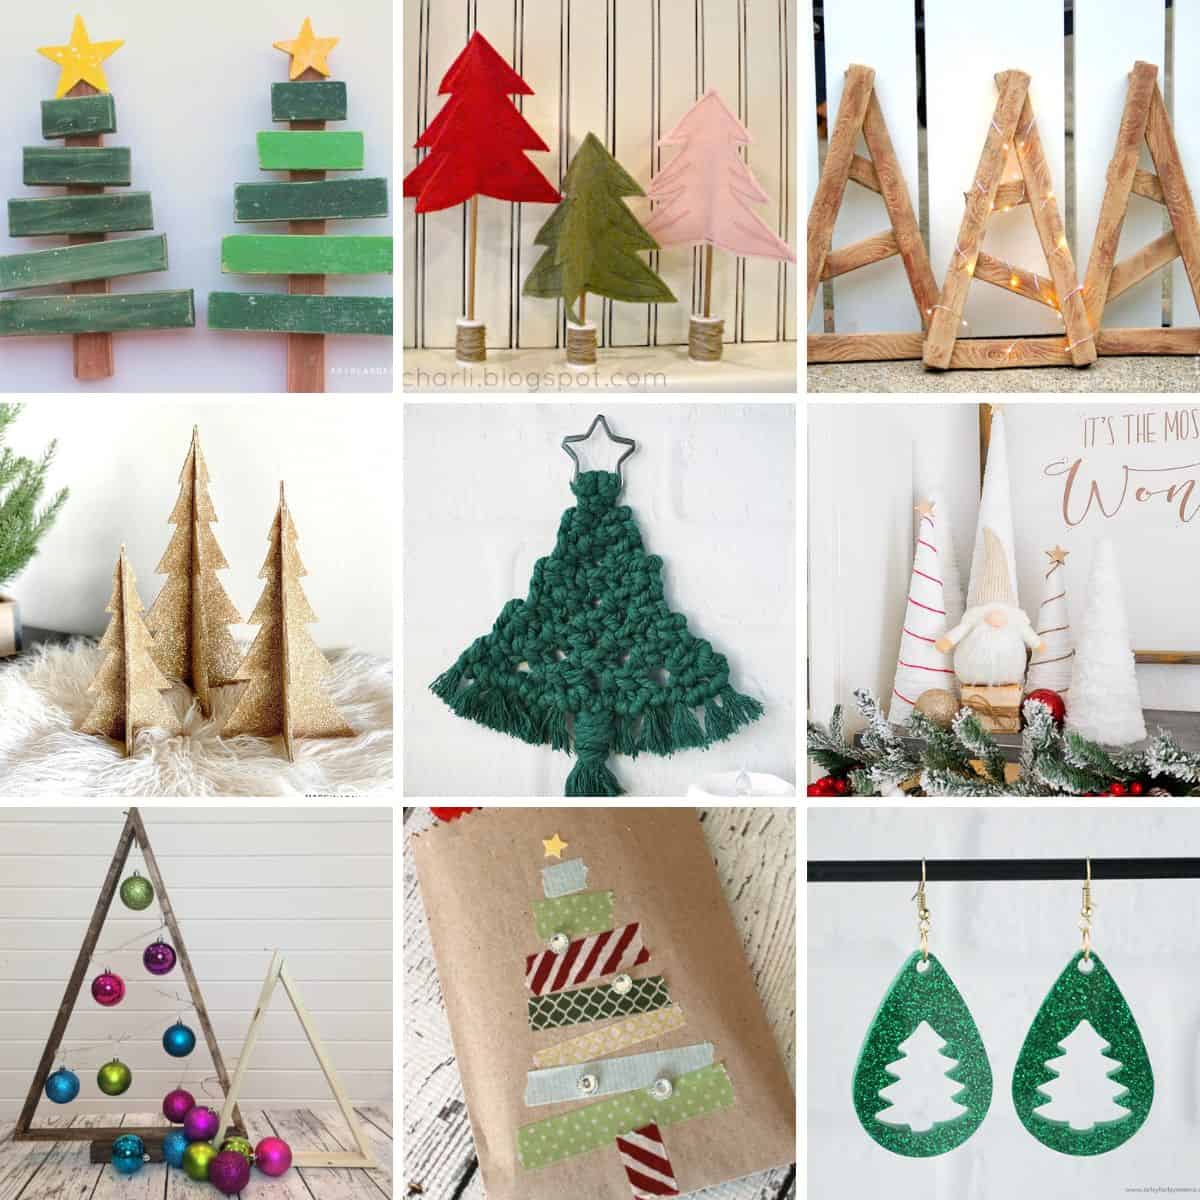 Diy Pom Pom Christmas Garland for Your Tree - The Crafting Nook